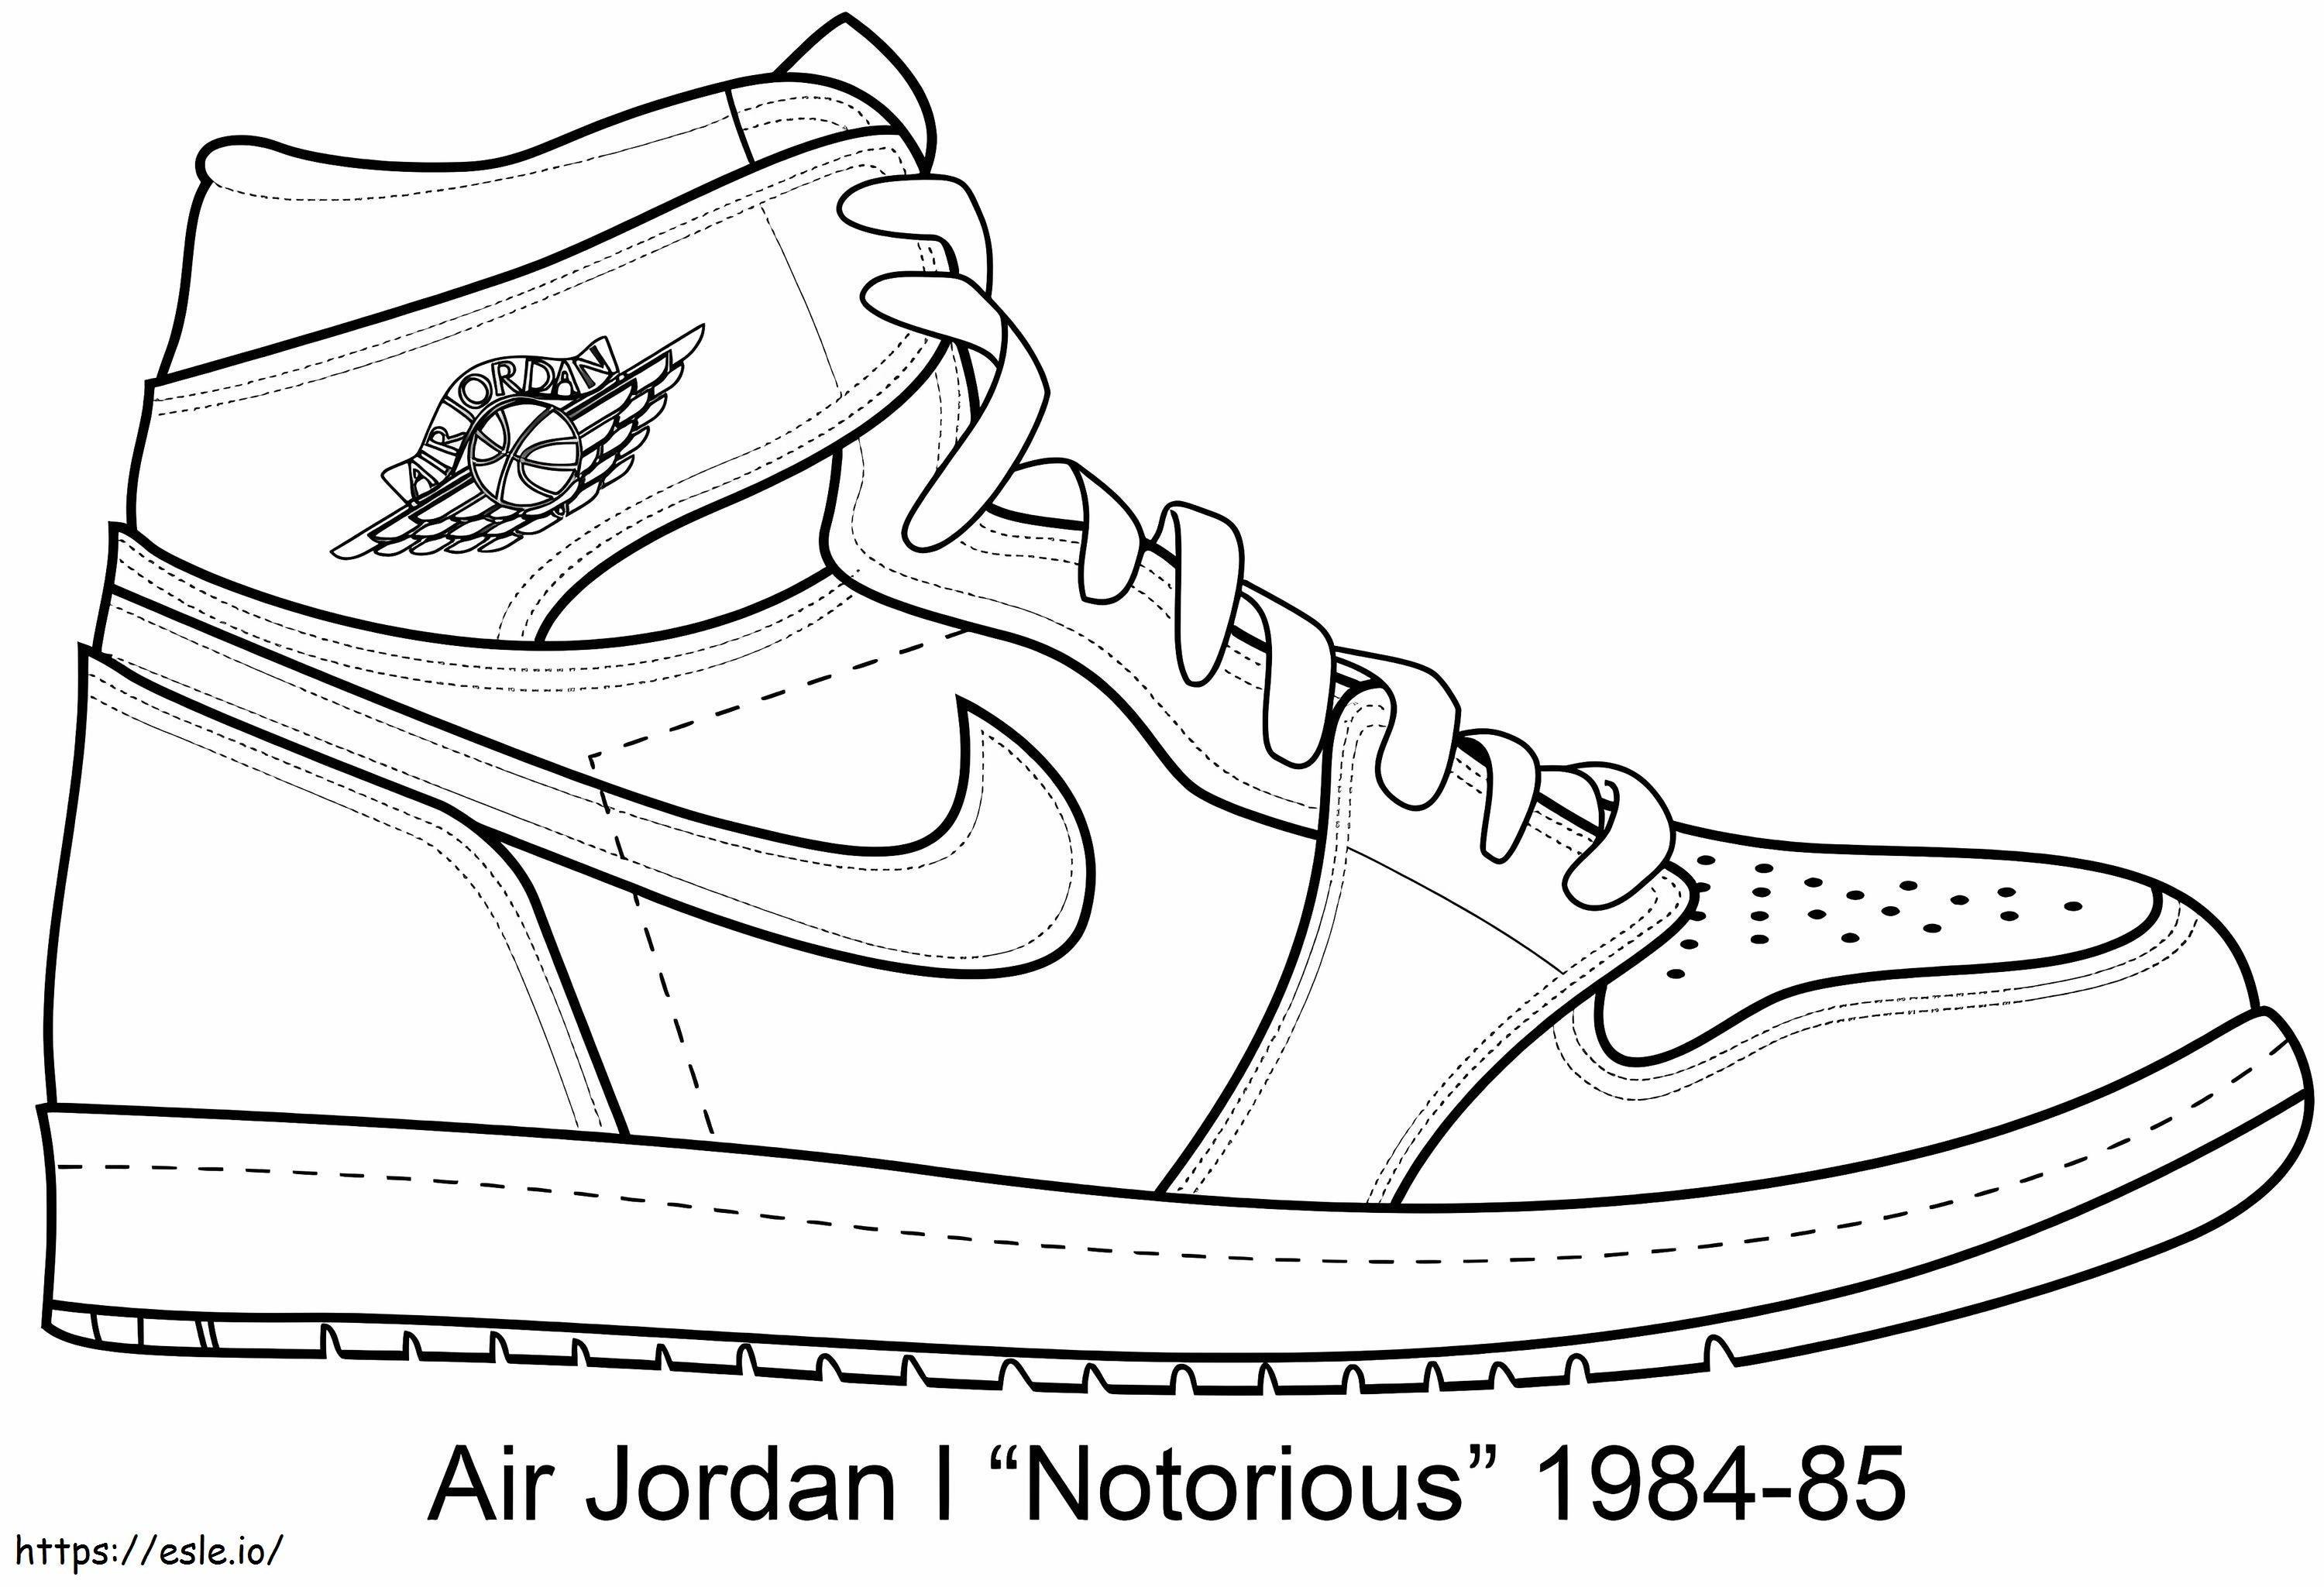 Cool Jordan 1 coloring page